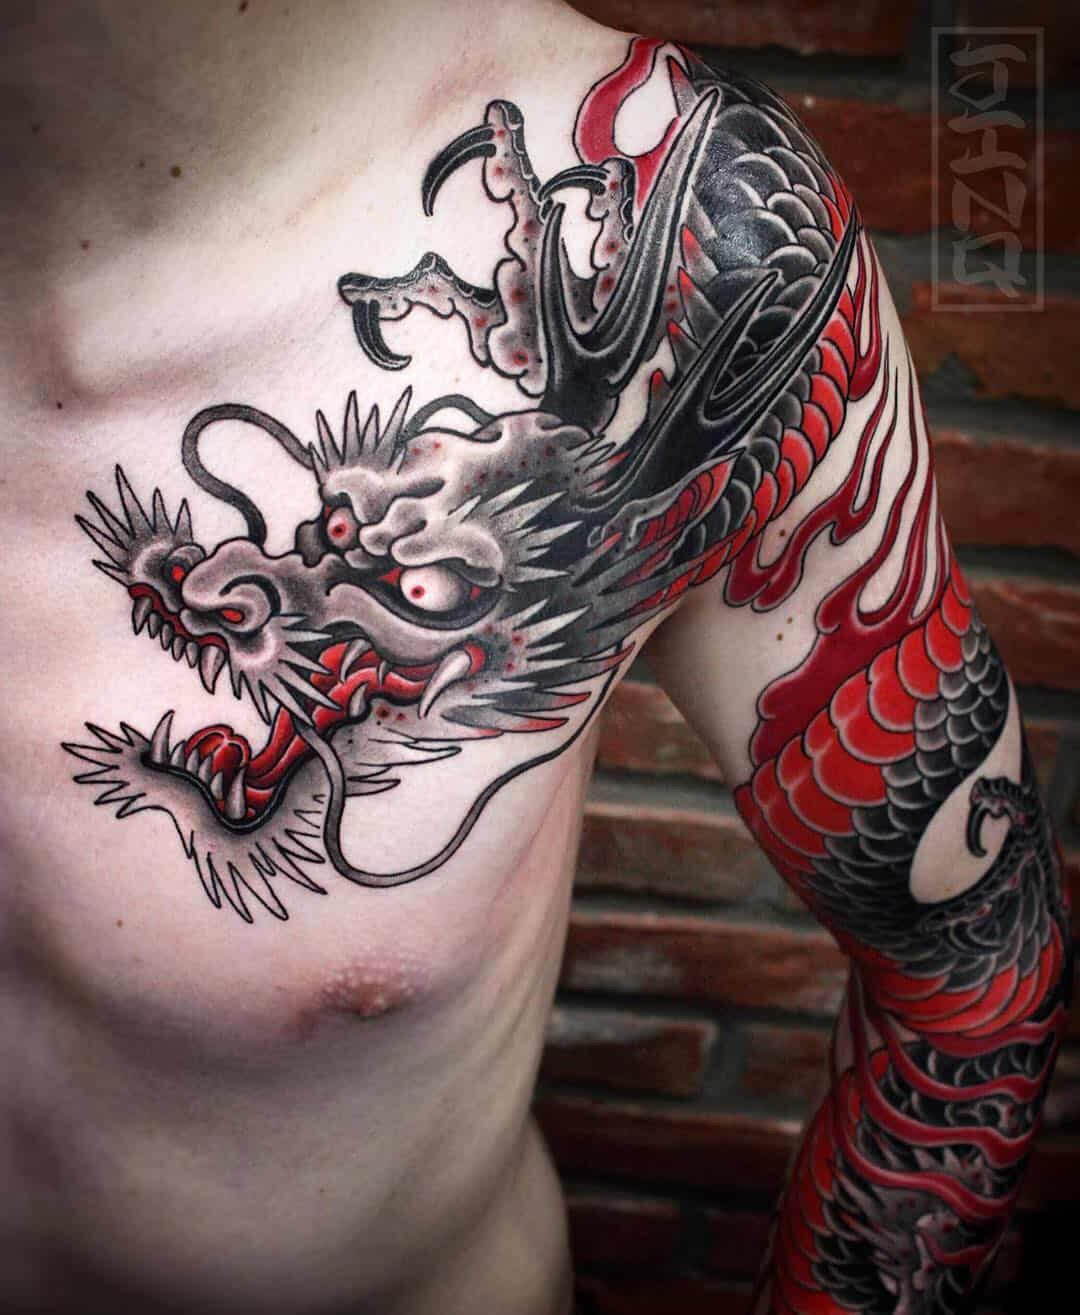 60 Dragon Tattoo Ideas To Copy To Live Your Fairytale Through Tattoos regarding dimensions 1080 X 1315